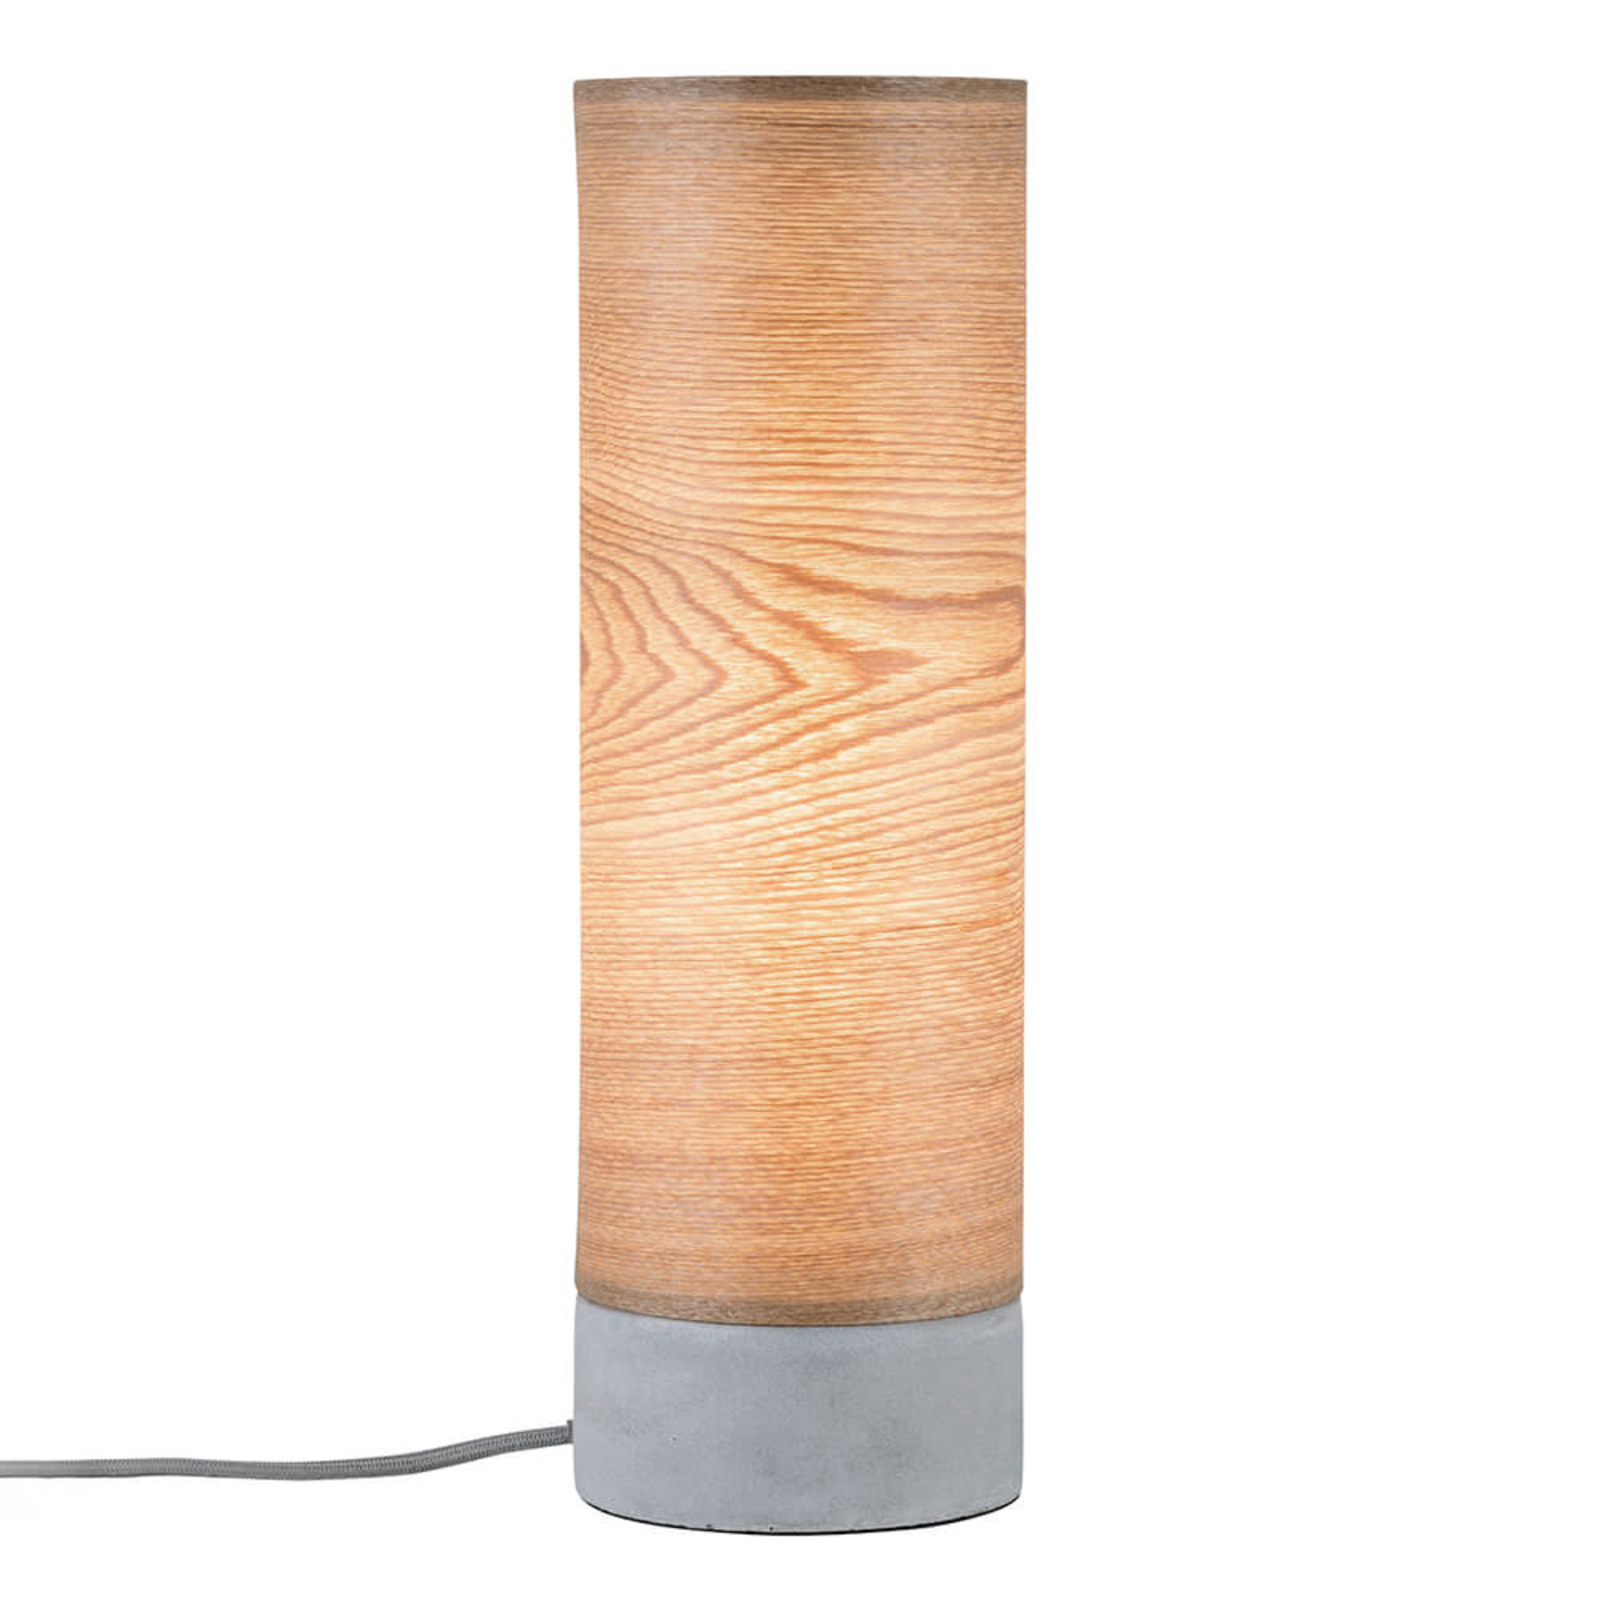 Sylindrisk bordlampe Skadi i treverk med betongfot